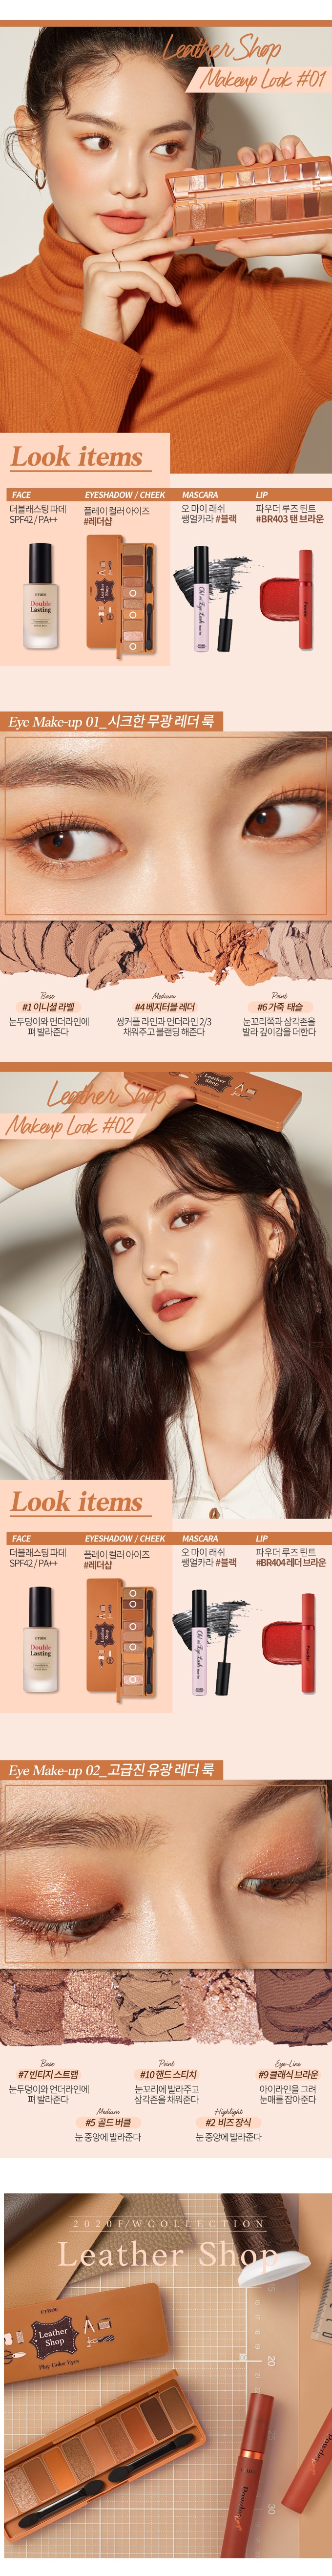 Etude House Play Color Eyes Mini Leather Shop korean cosmetic makeup product online shop malaysia macau thailand4